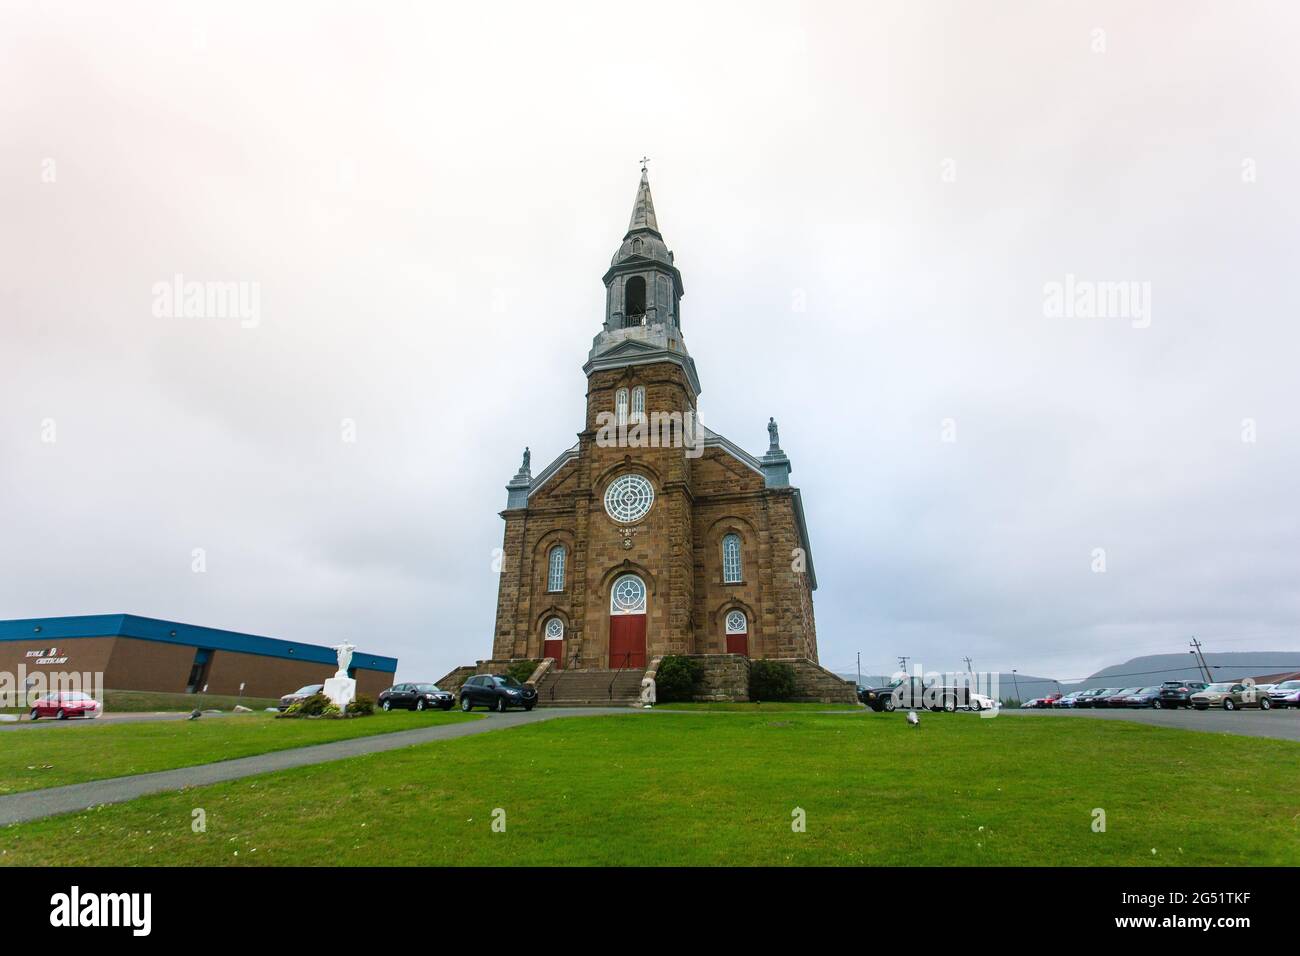 Église catholique Saint-Pierre römisch-katholische Kirche, römisch 120 Jahre alte römisch-katholische Kirche in Cheticamp, Cape Breton, Nova Scotia, Kanada Stockfoto